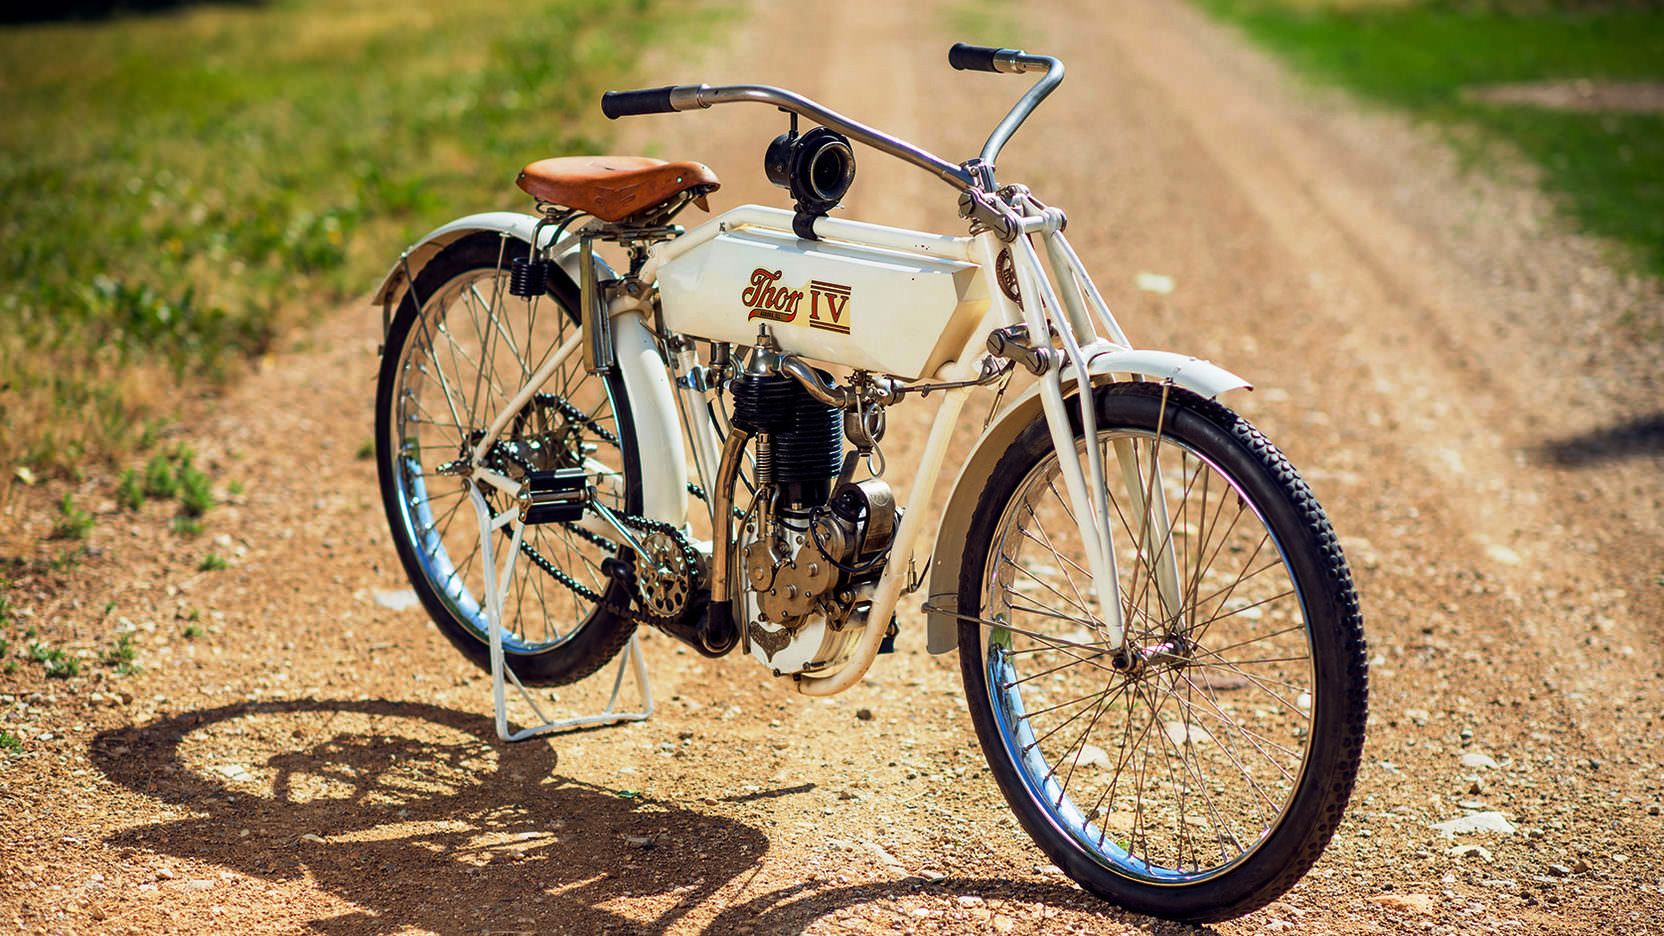 2 Thor-Single-Motorcycle 1910.jpg